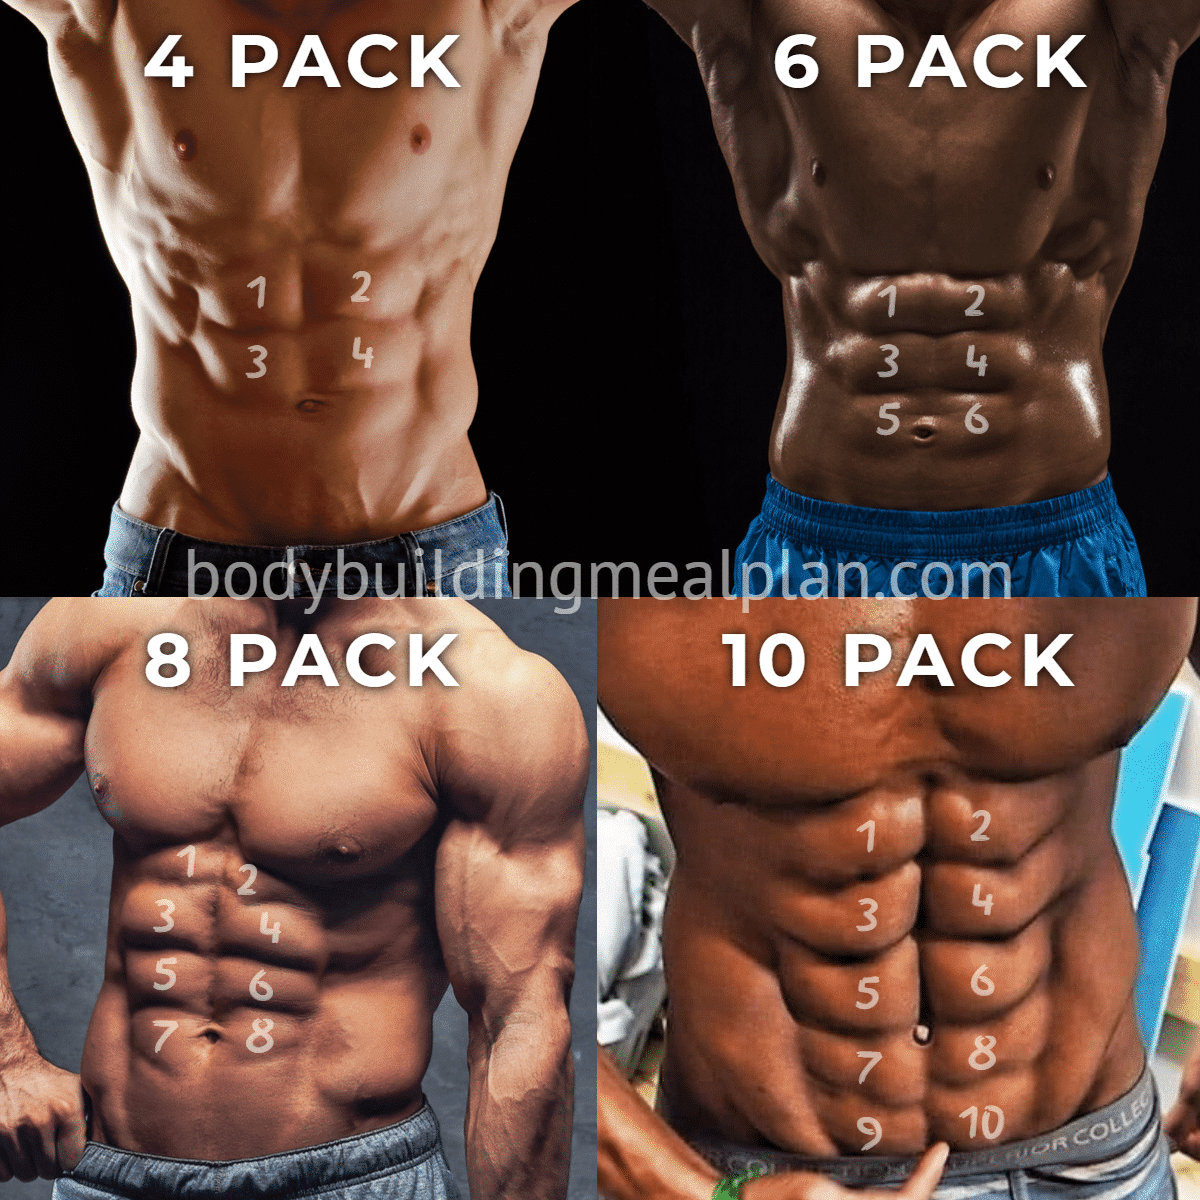 4 Pack Abs vs 6,8,10 Pack: Men & Women Genetics, Body Fat Percentage